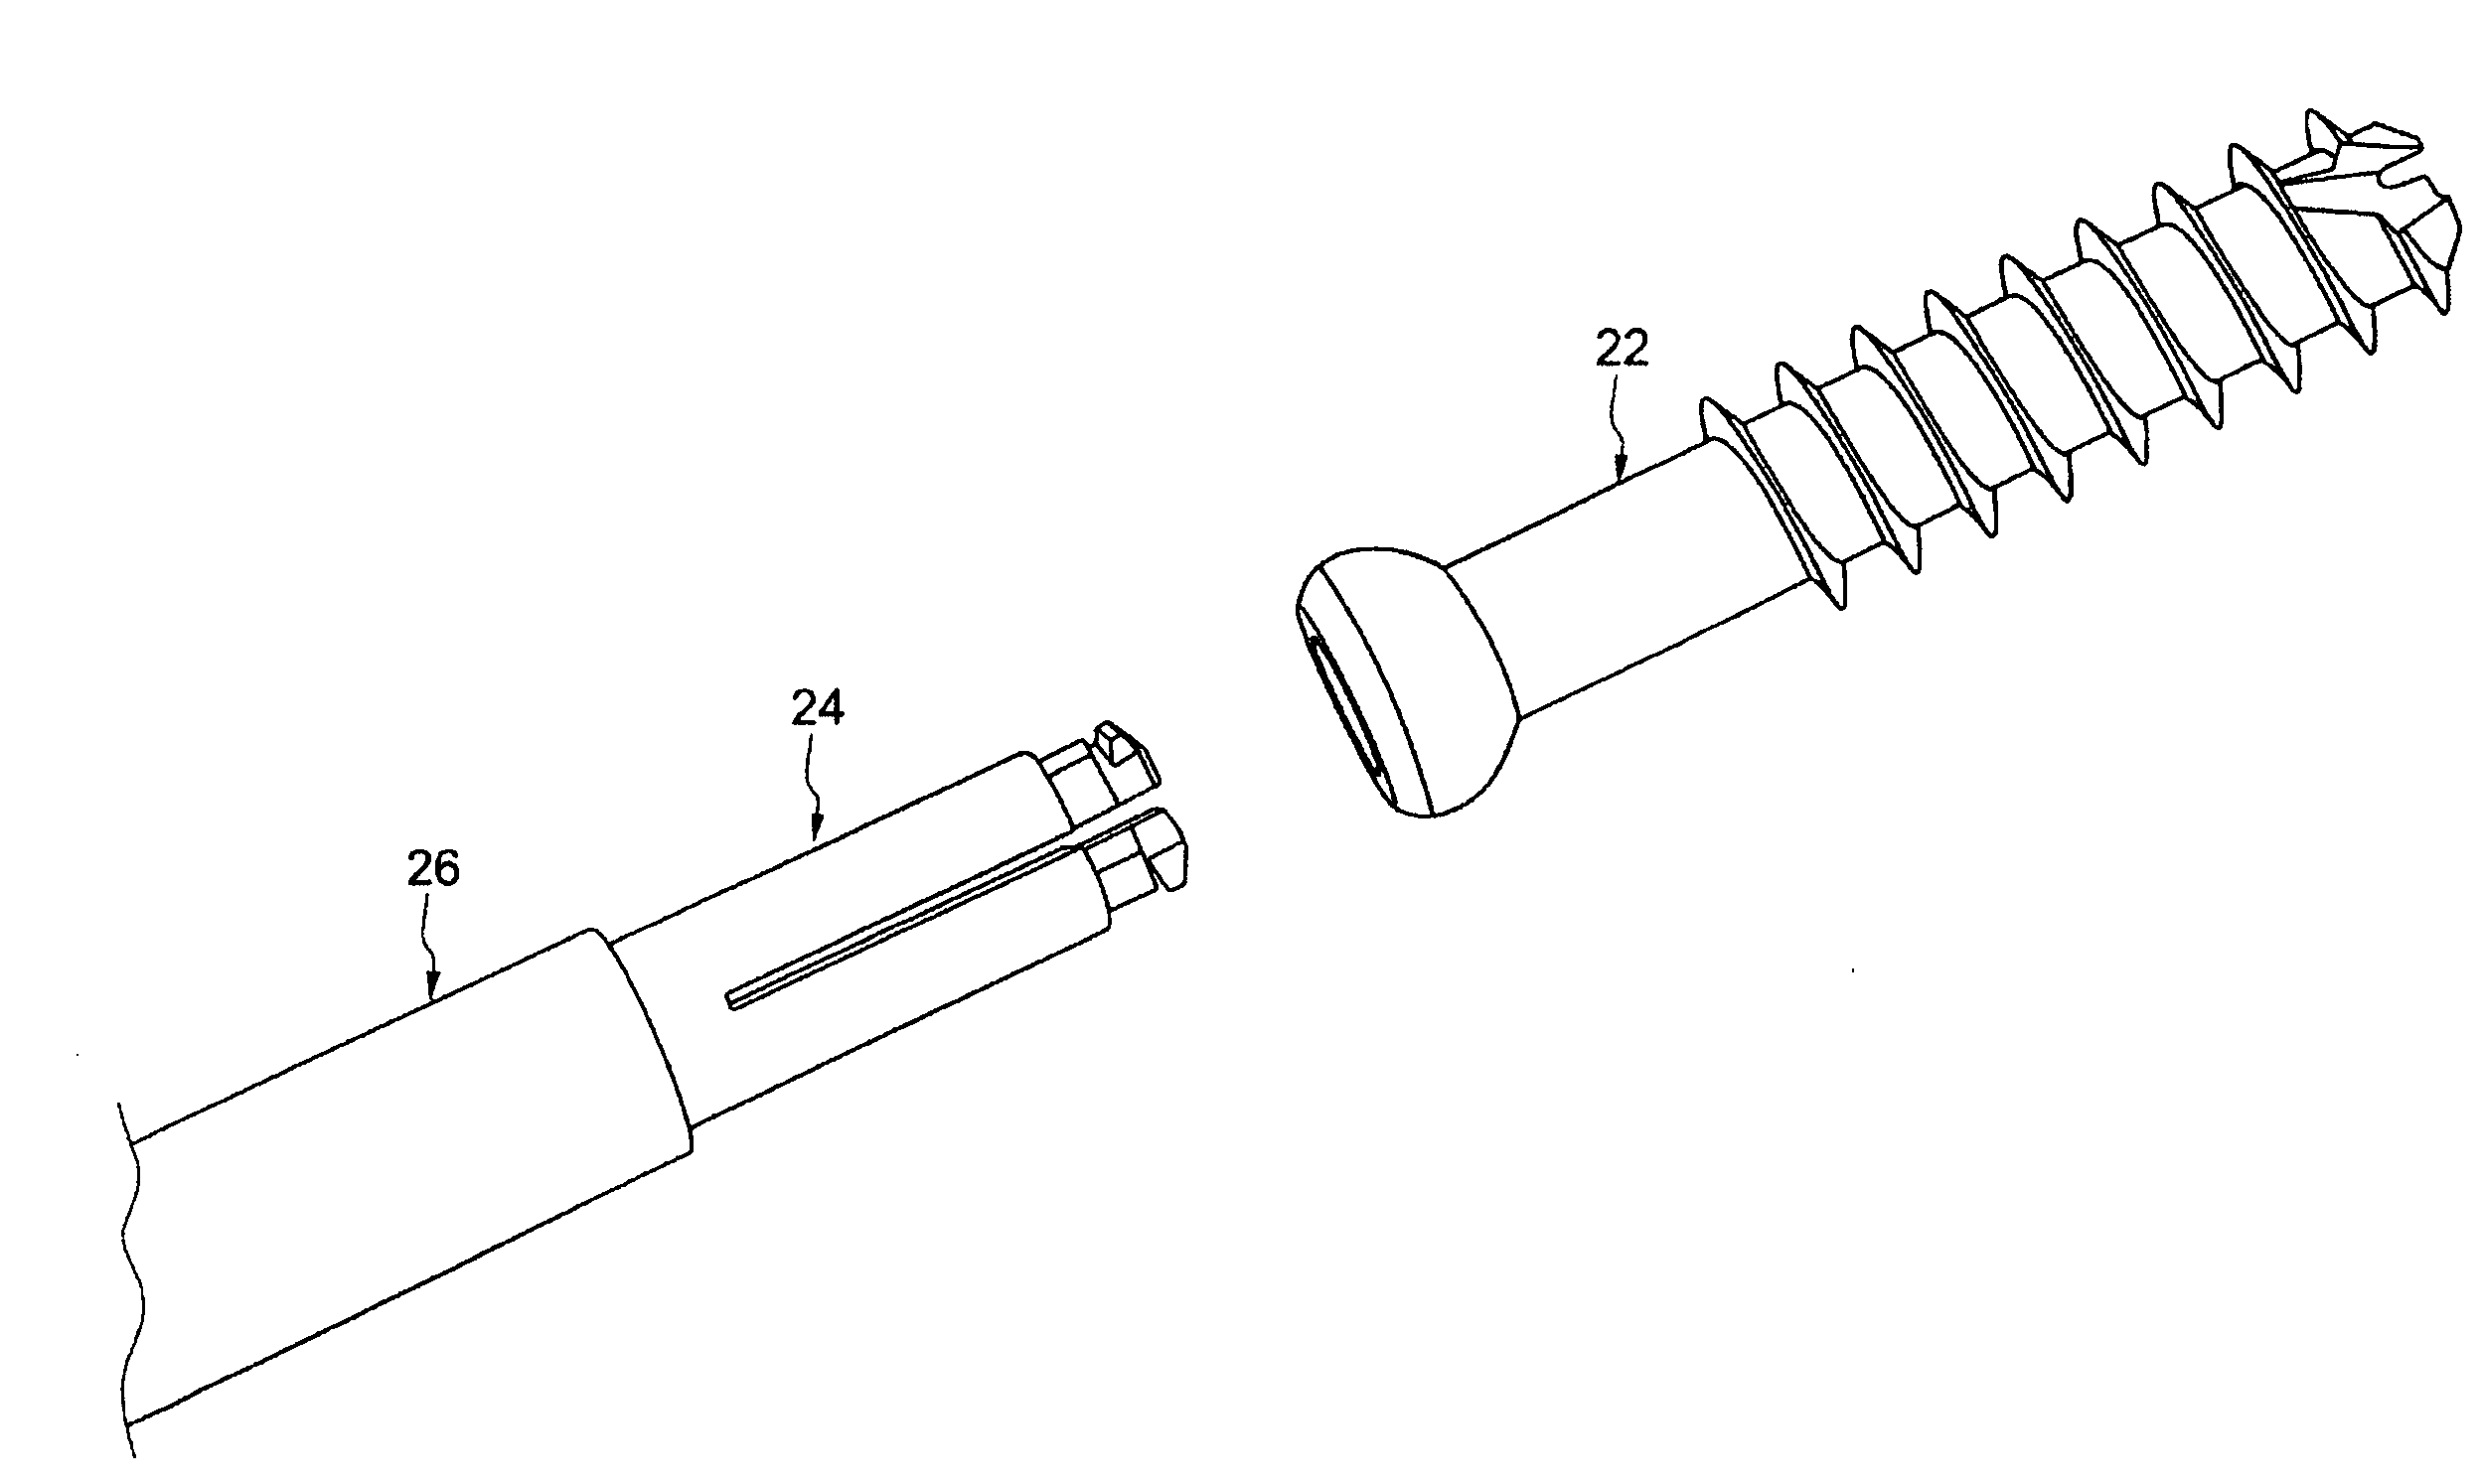 Bone screw holding device